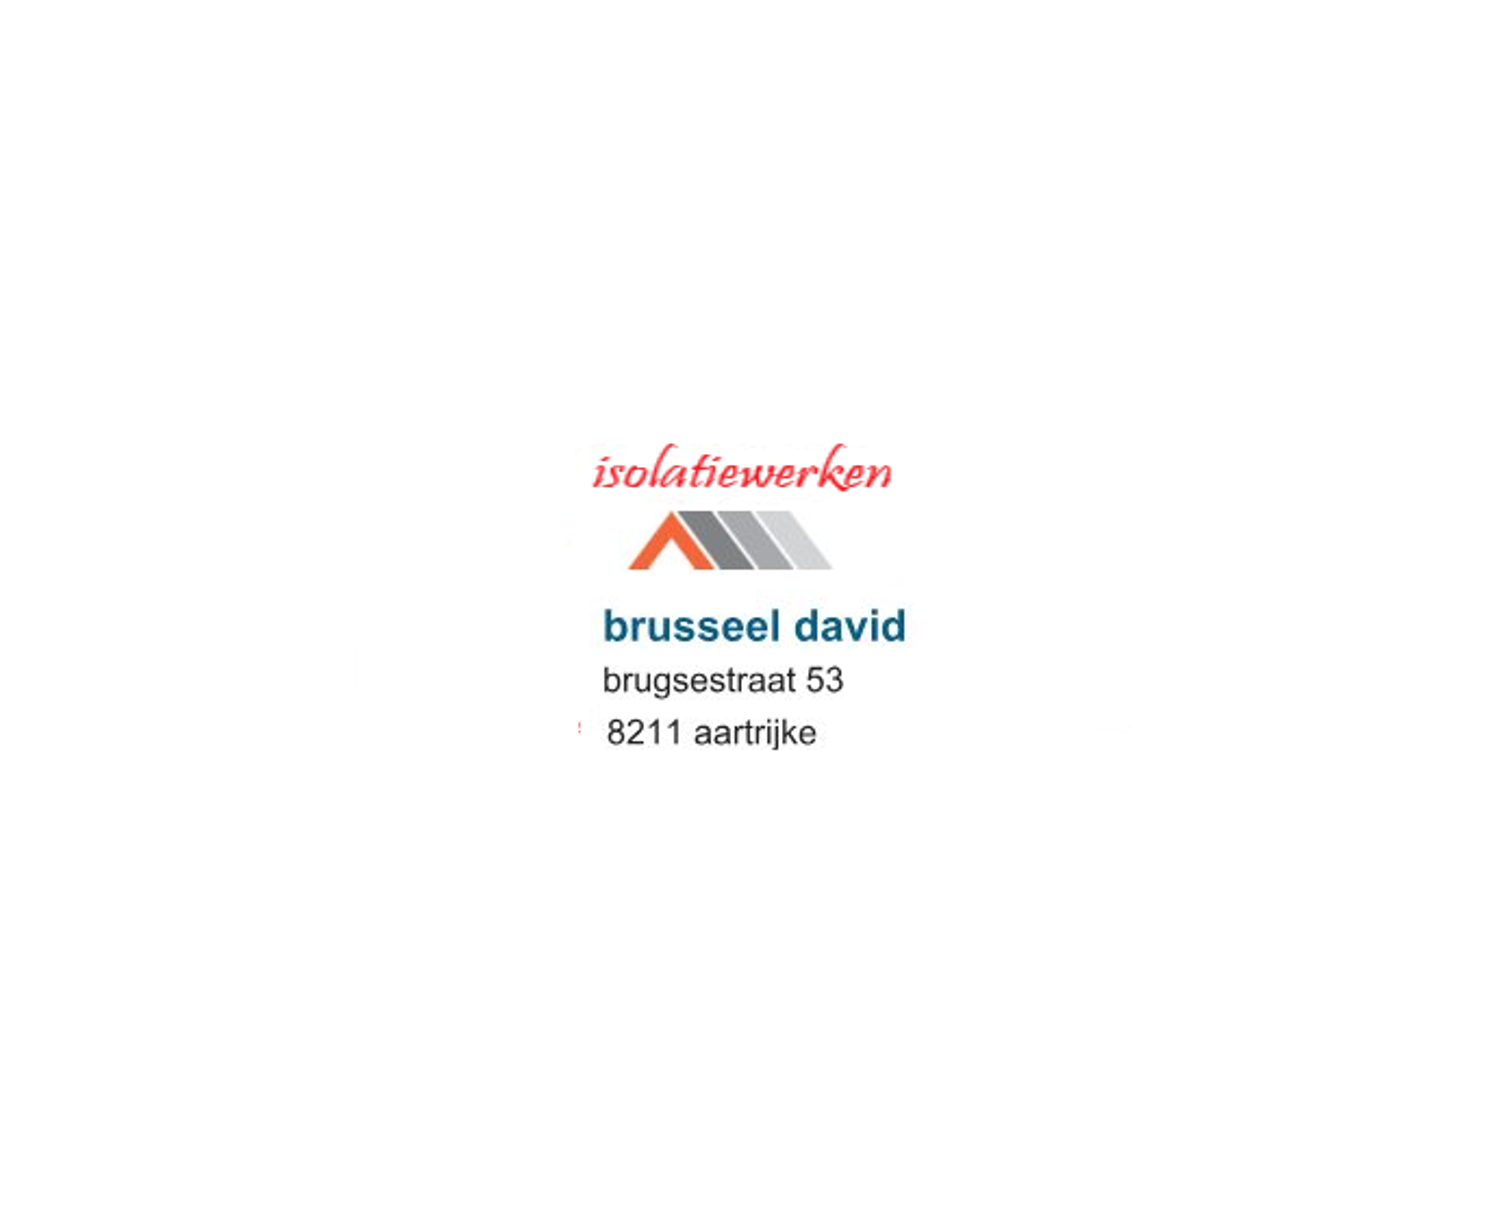 Brusseel David bv logo